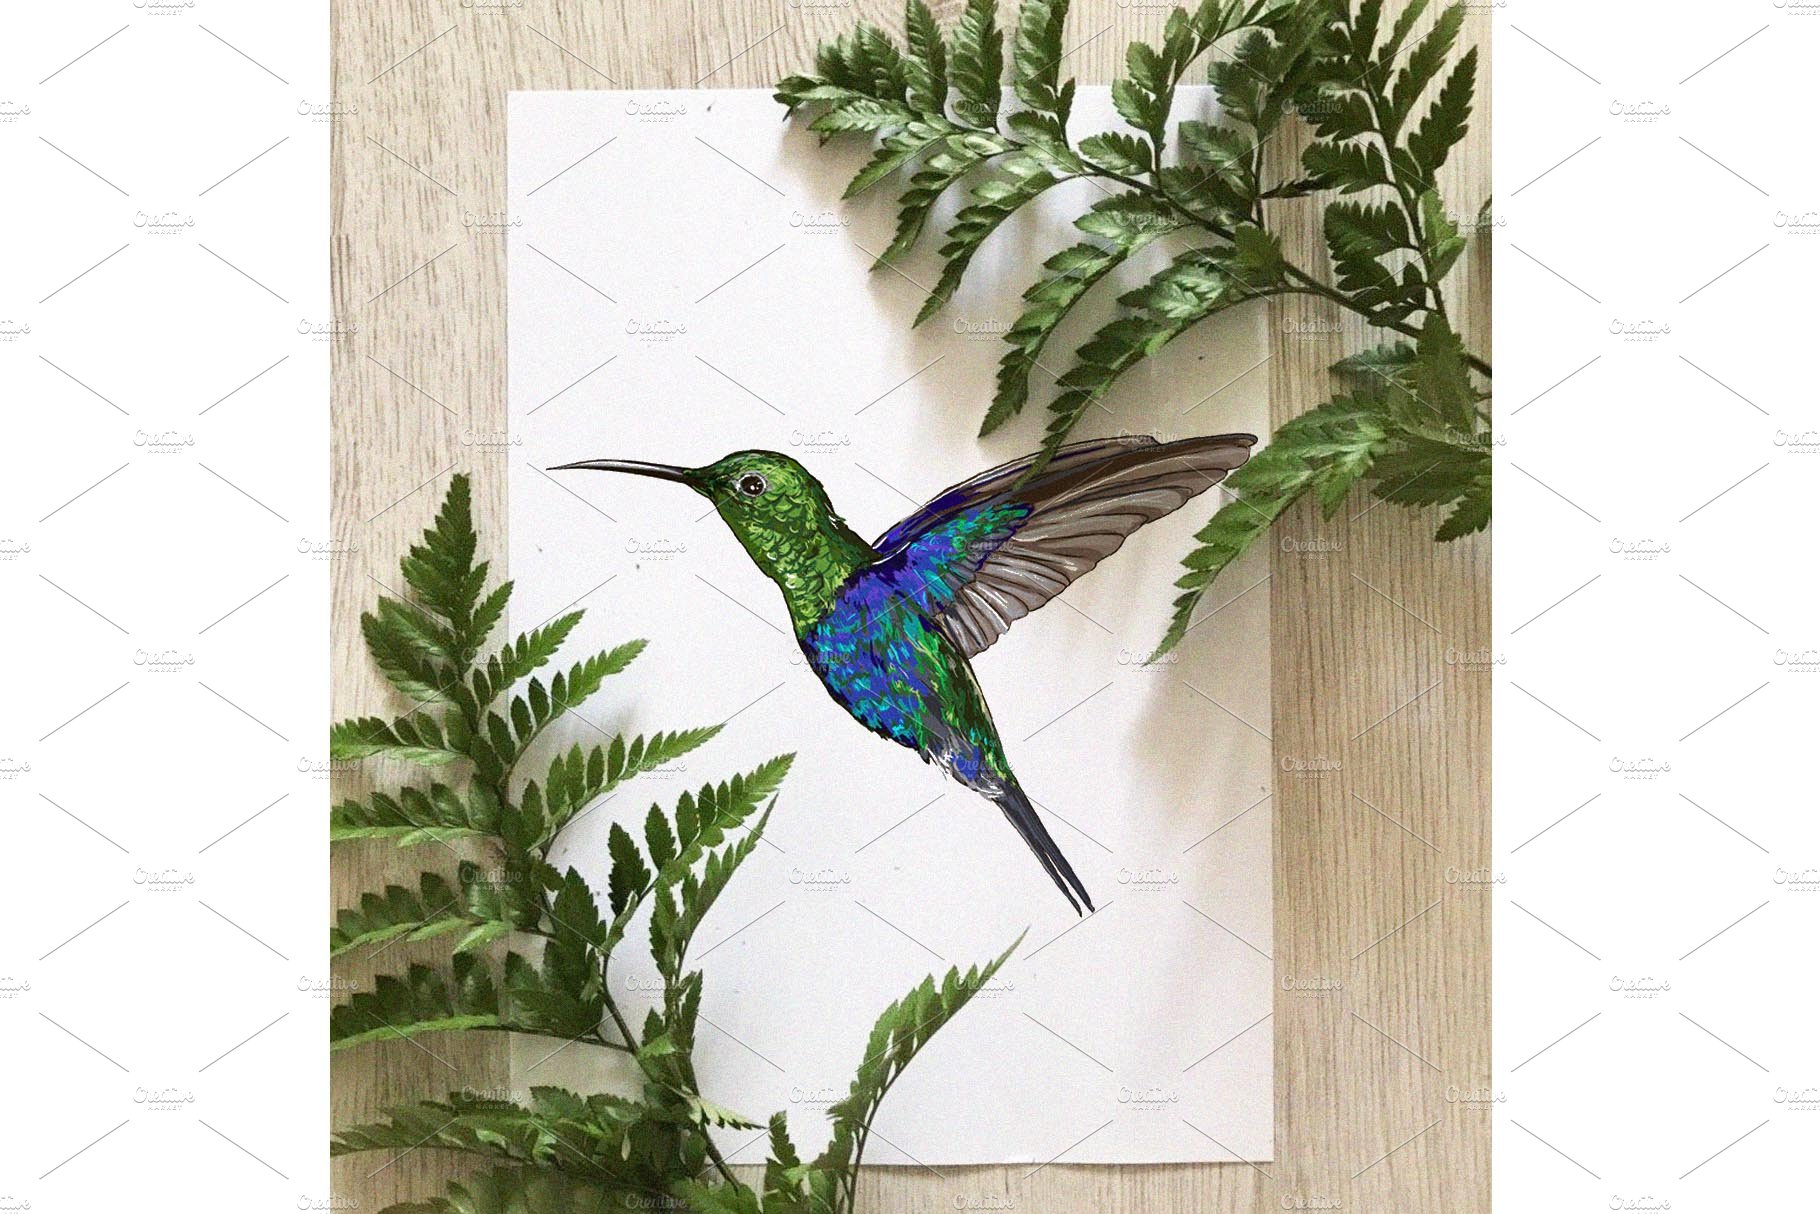 Hummingbird (colibri) illustration preview image.